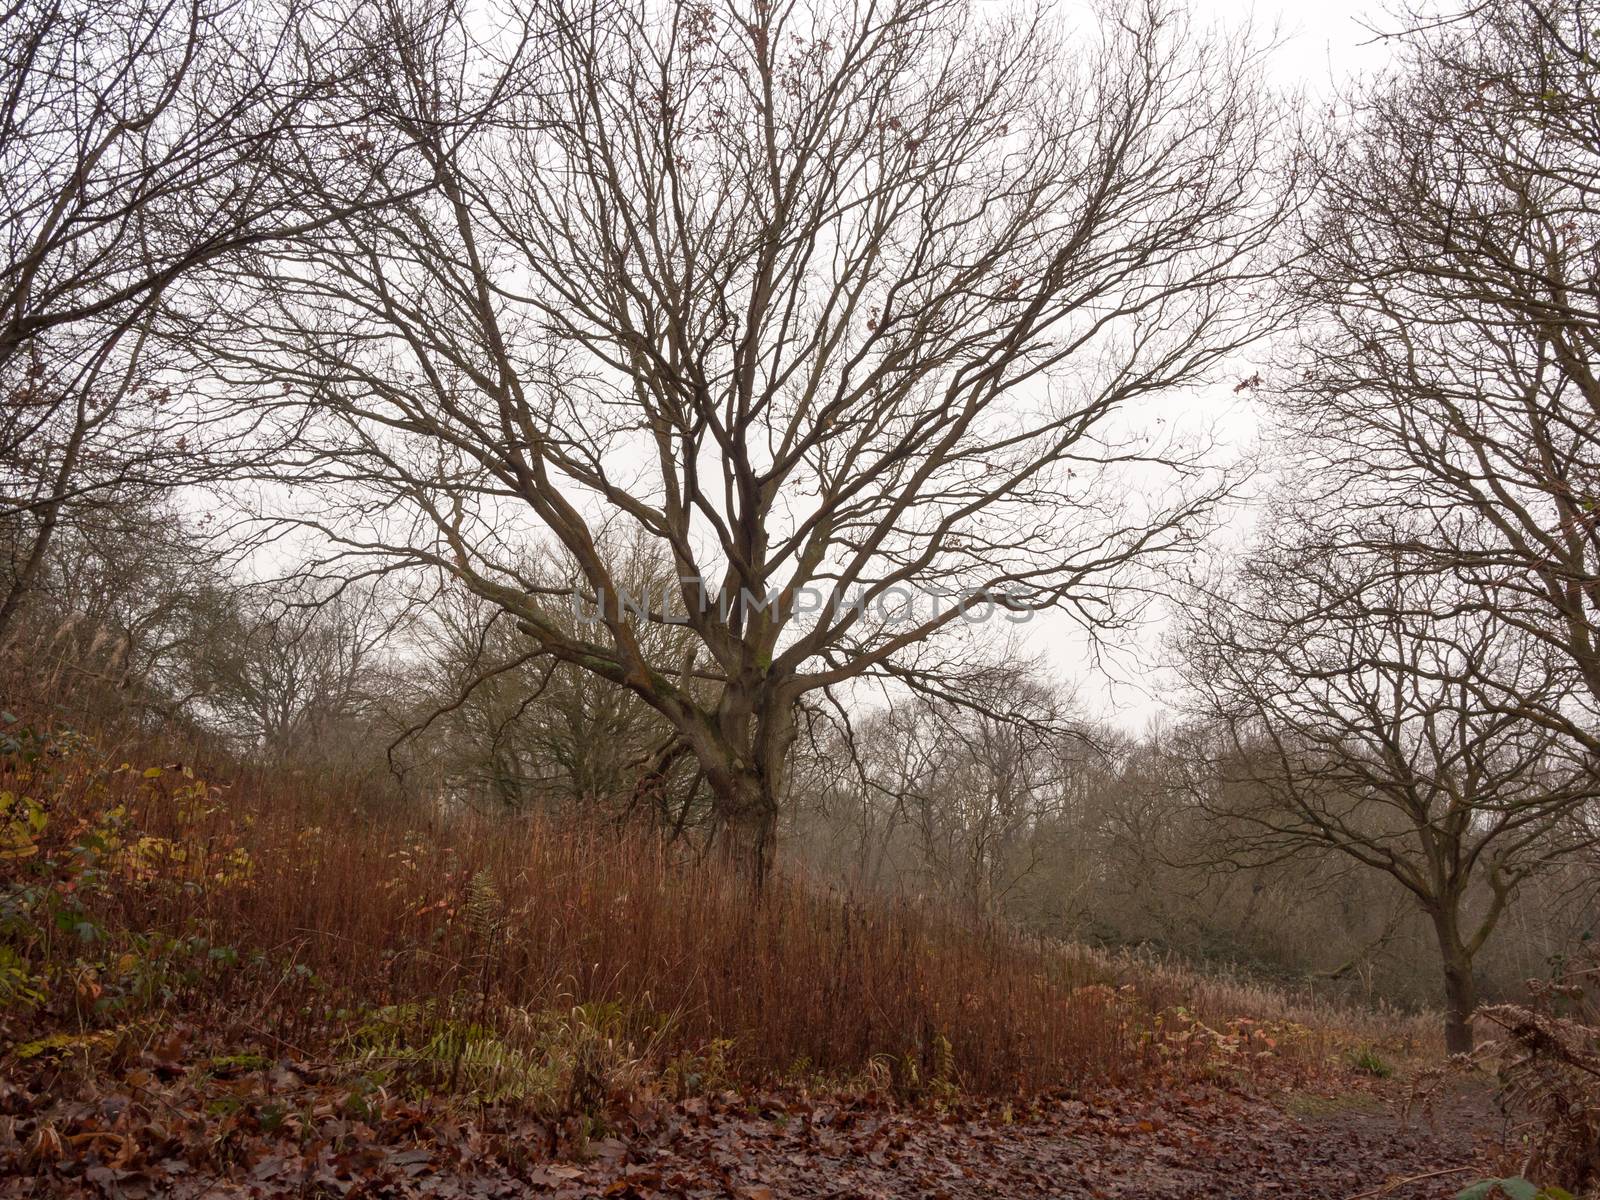 bare branch tree grass dark overcast autumn day moody; essex; england; uk